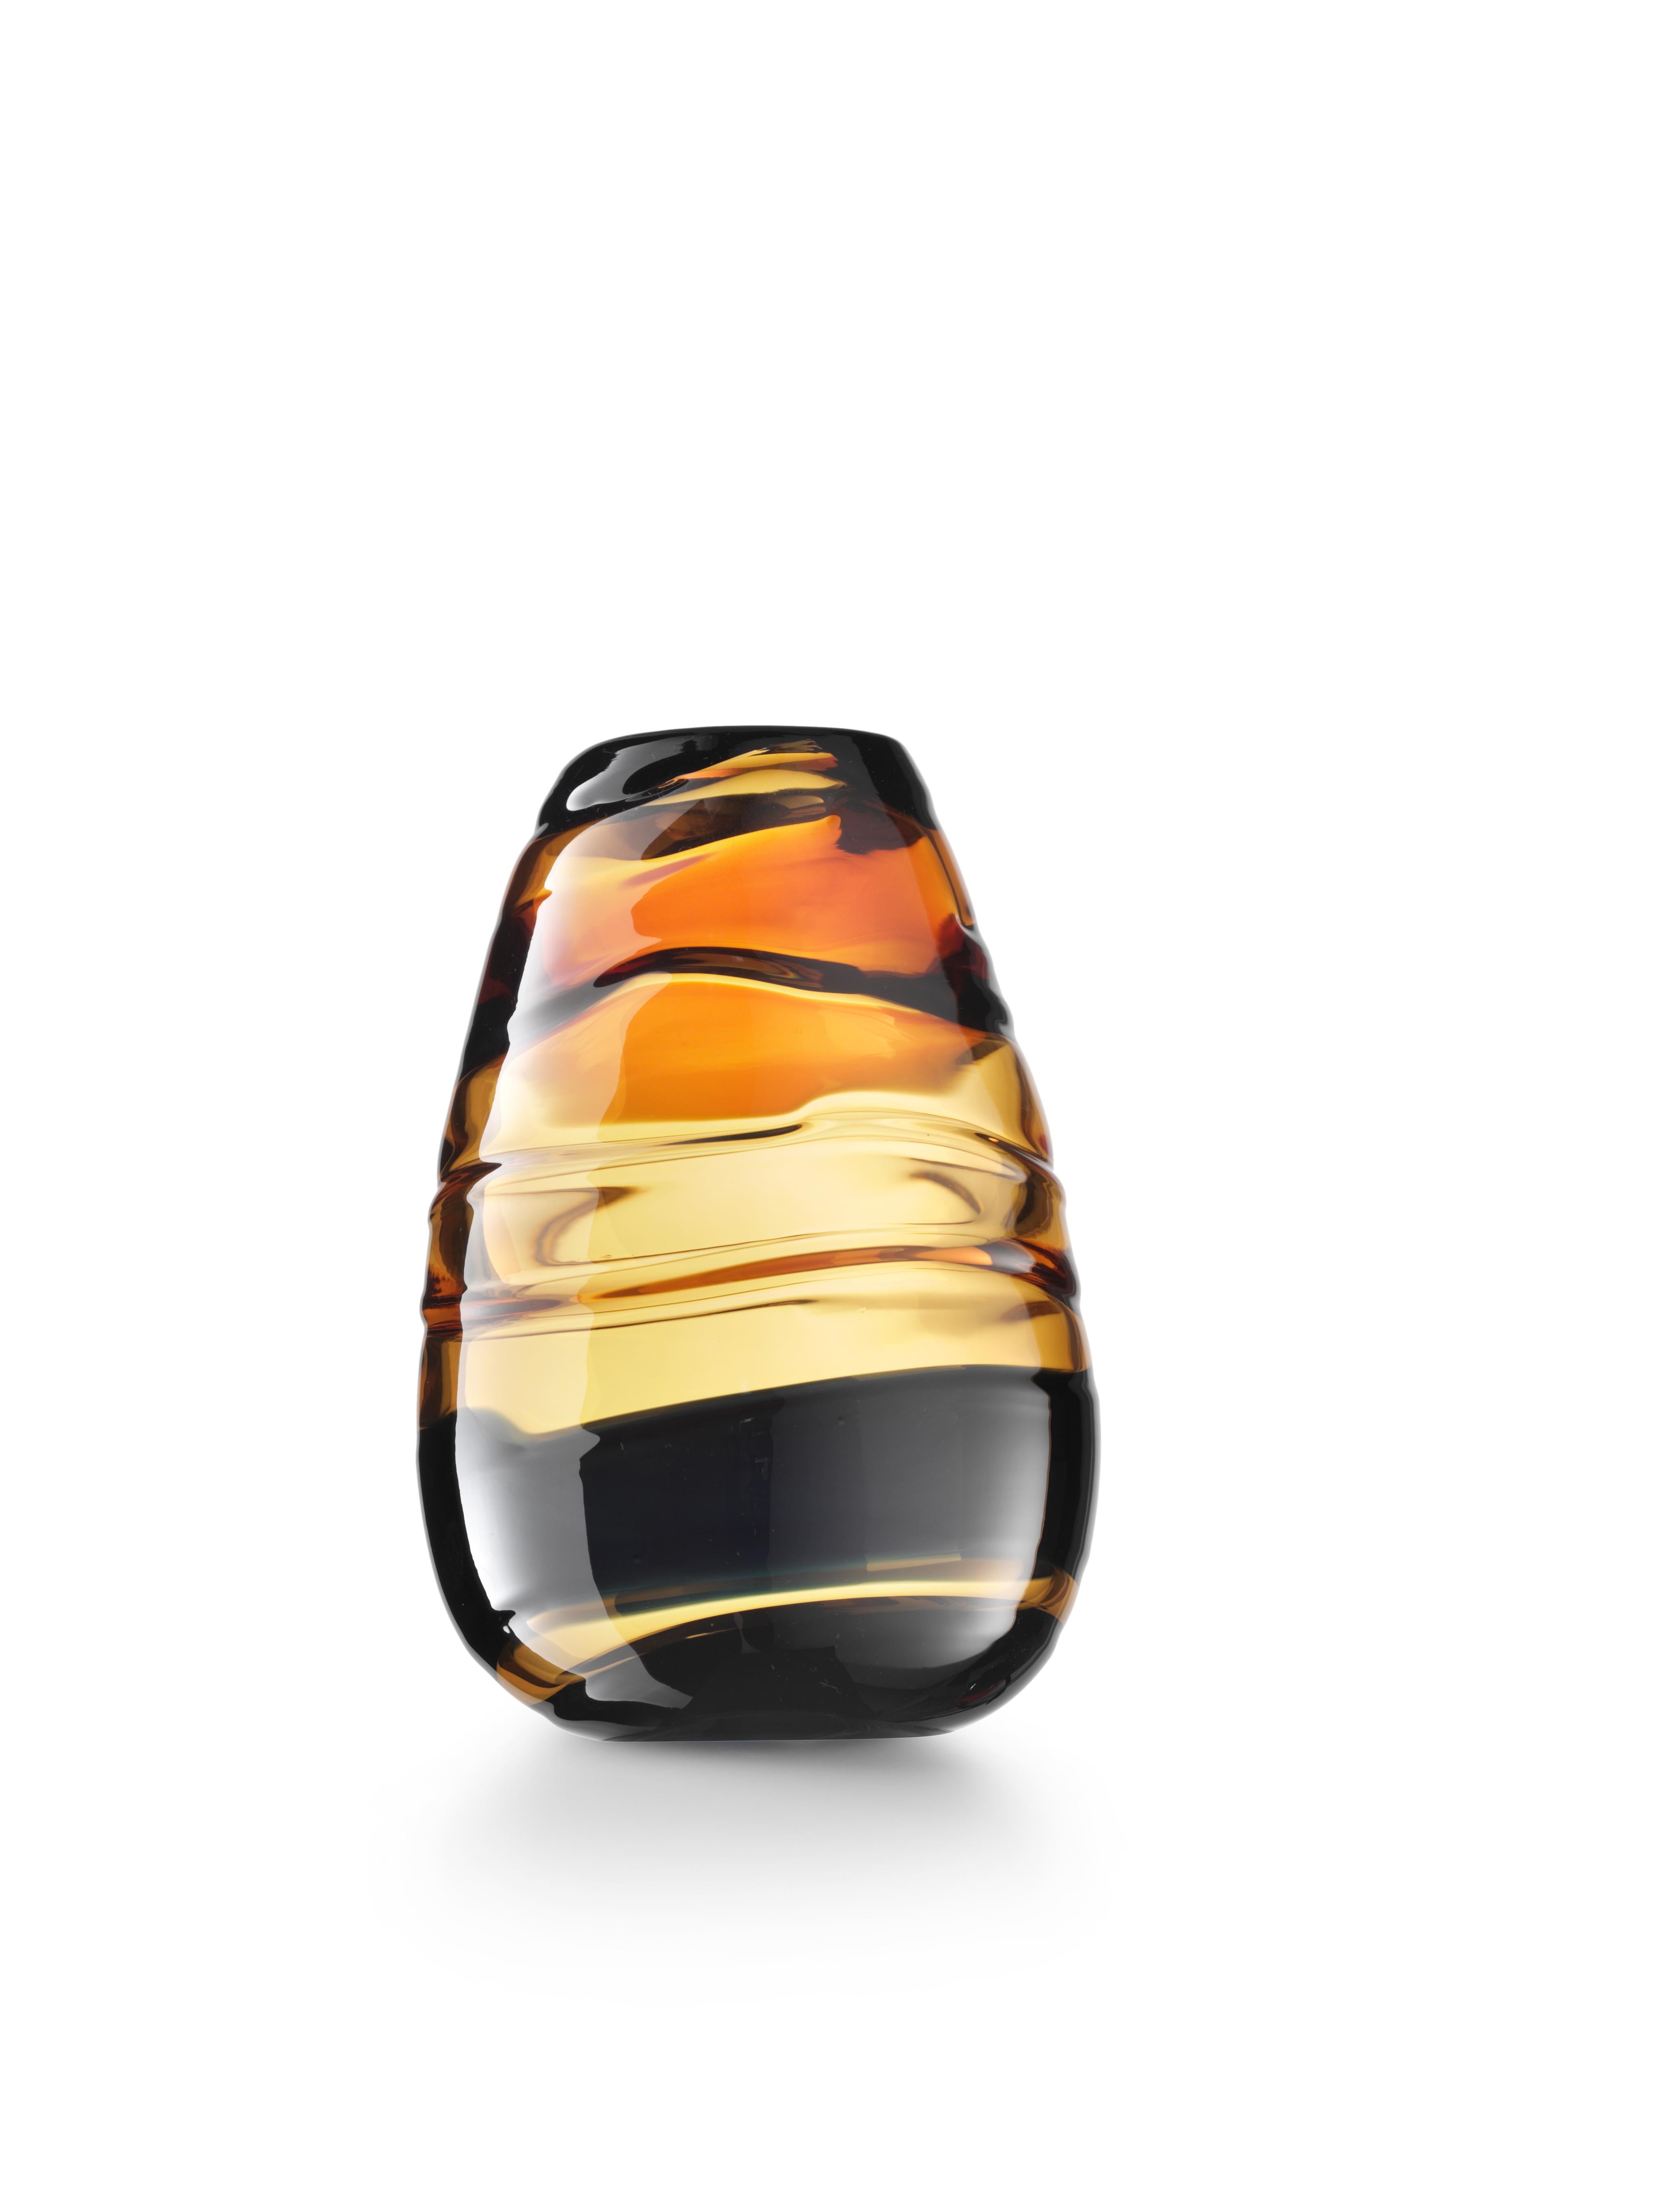 Brown (02360) Medium Sassi Murano Glass Vases by Luciano Gaspari